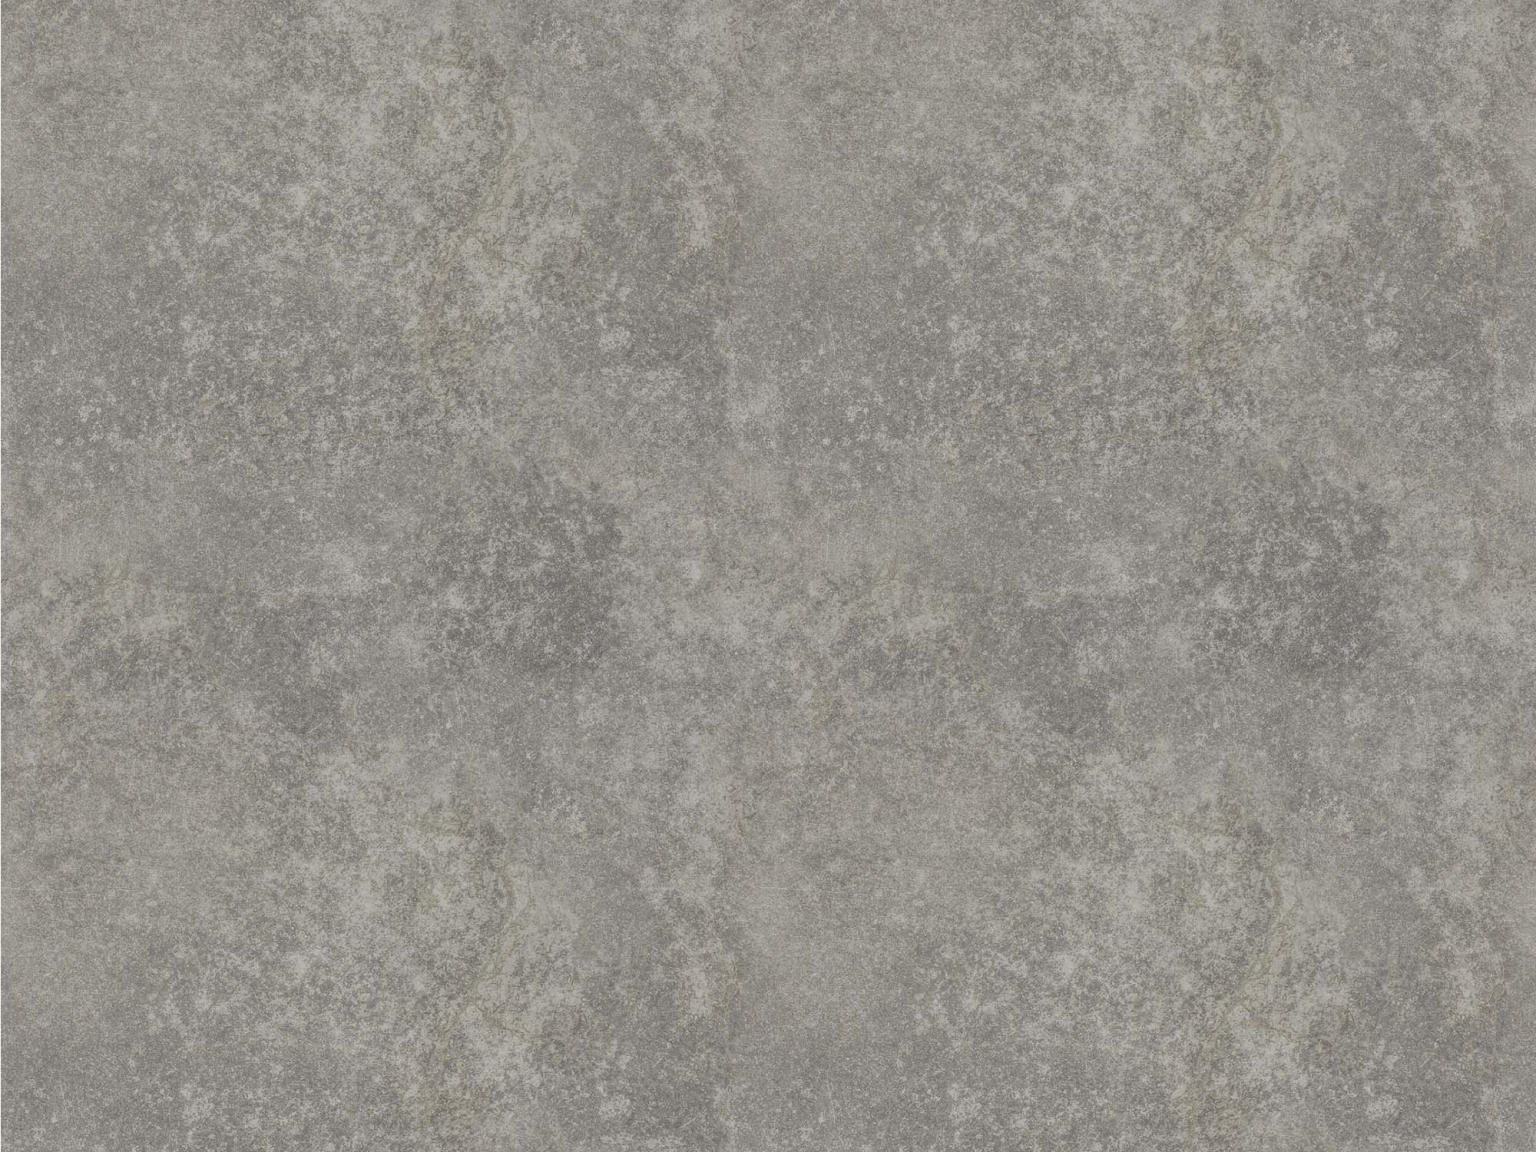 Seamless-Concrete-Wall-Texture-2-1536x1152-1.jpg